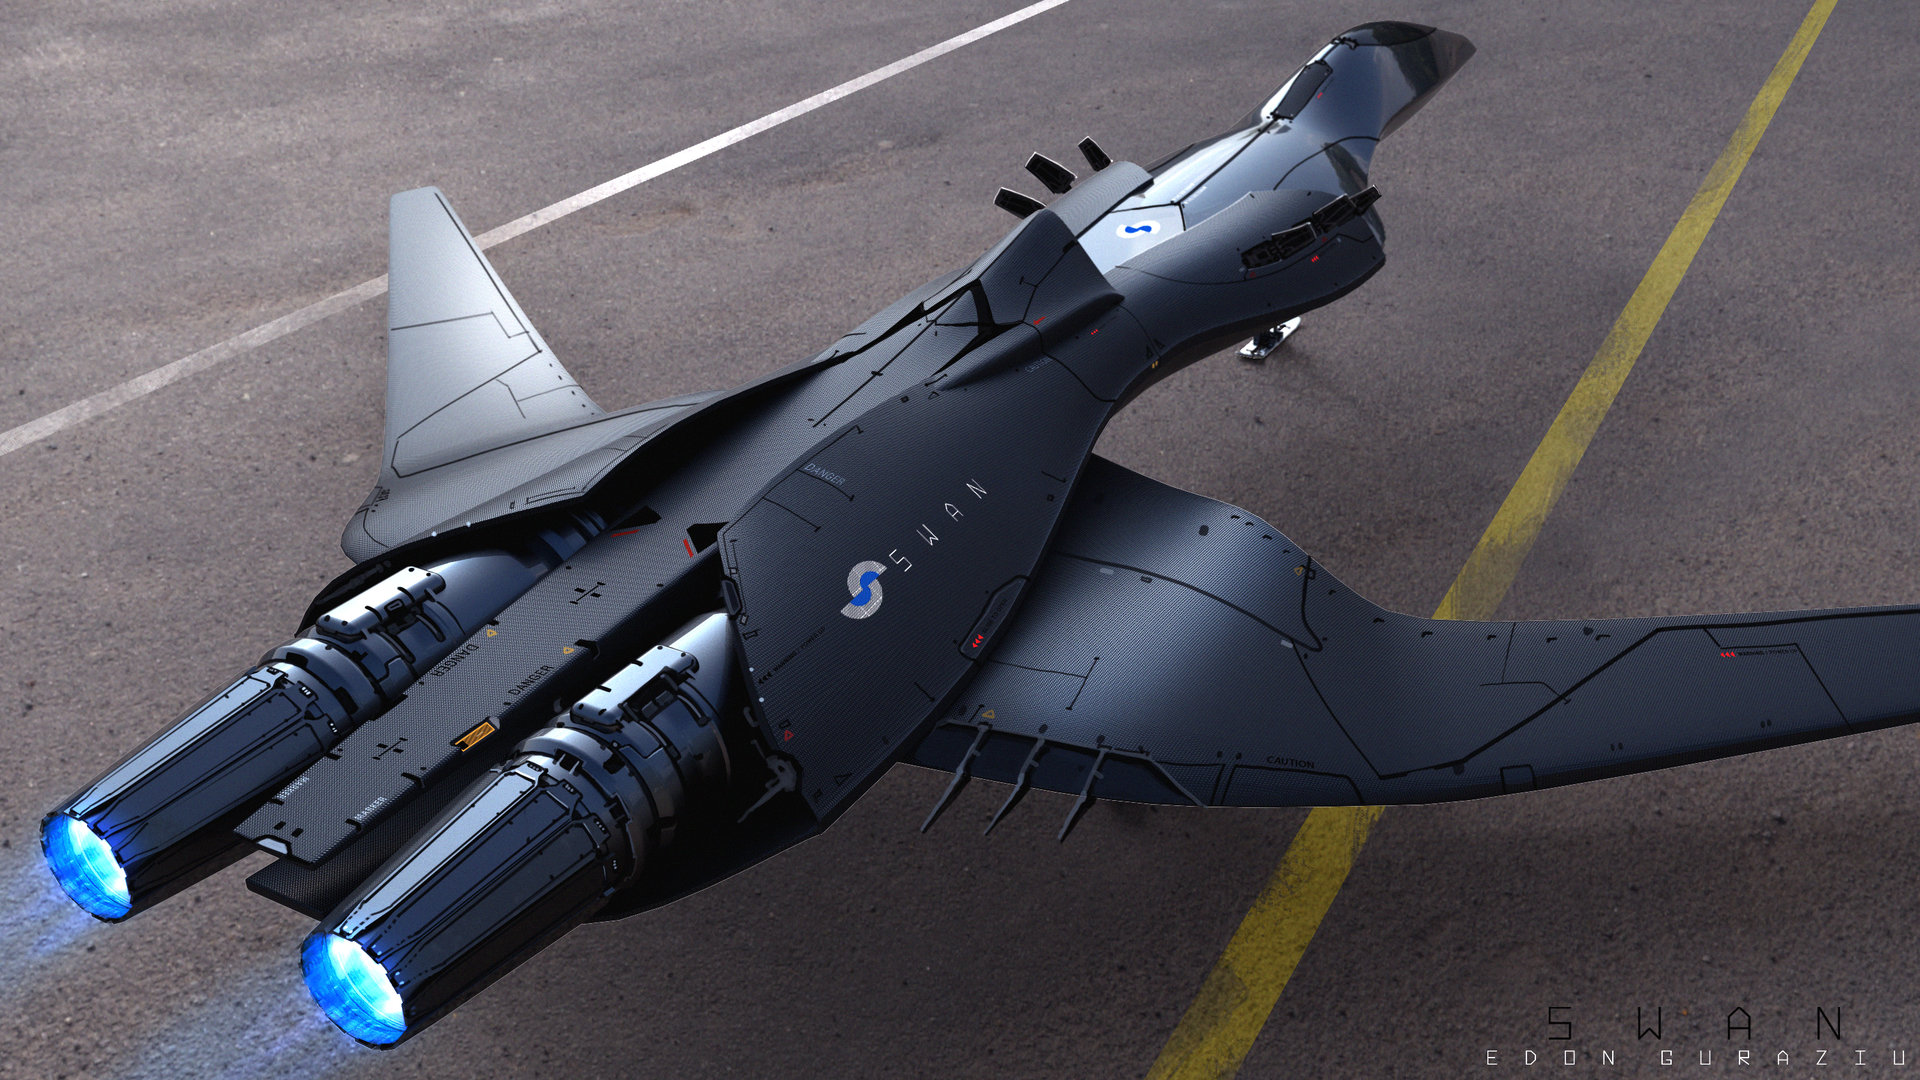 Edon Guraziu - Future Jet (S W A N) - Concept